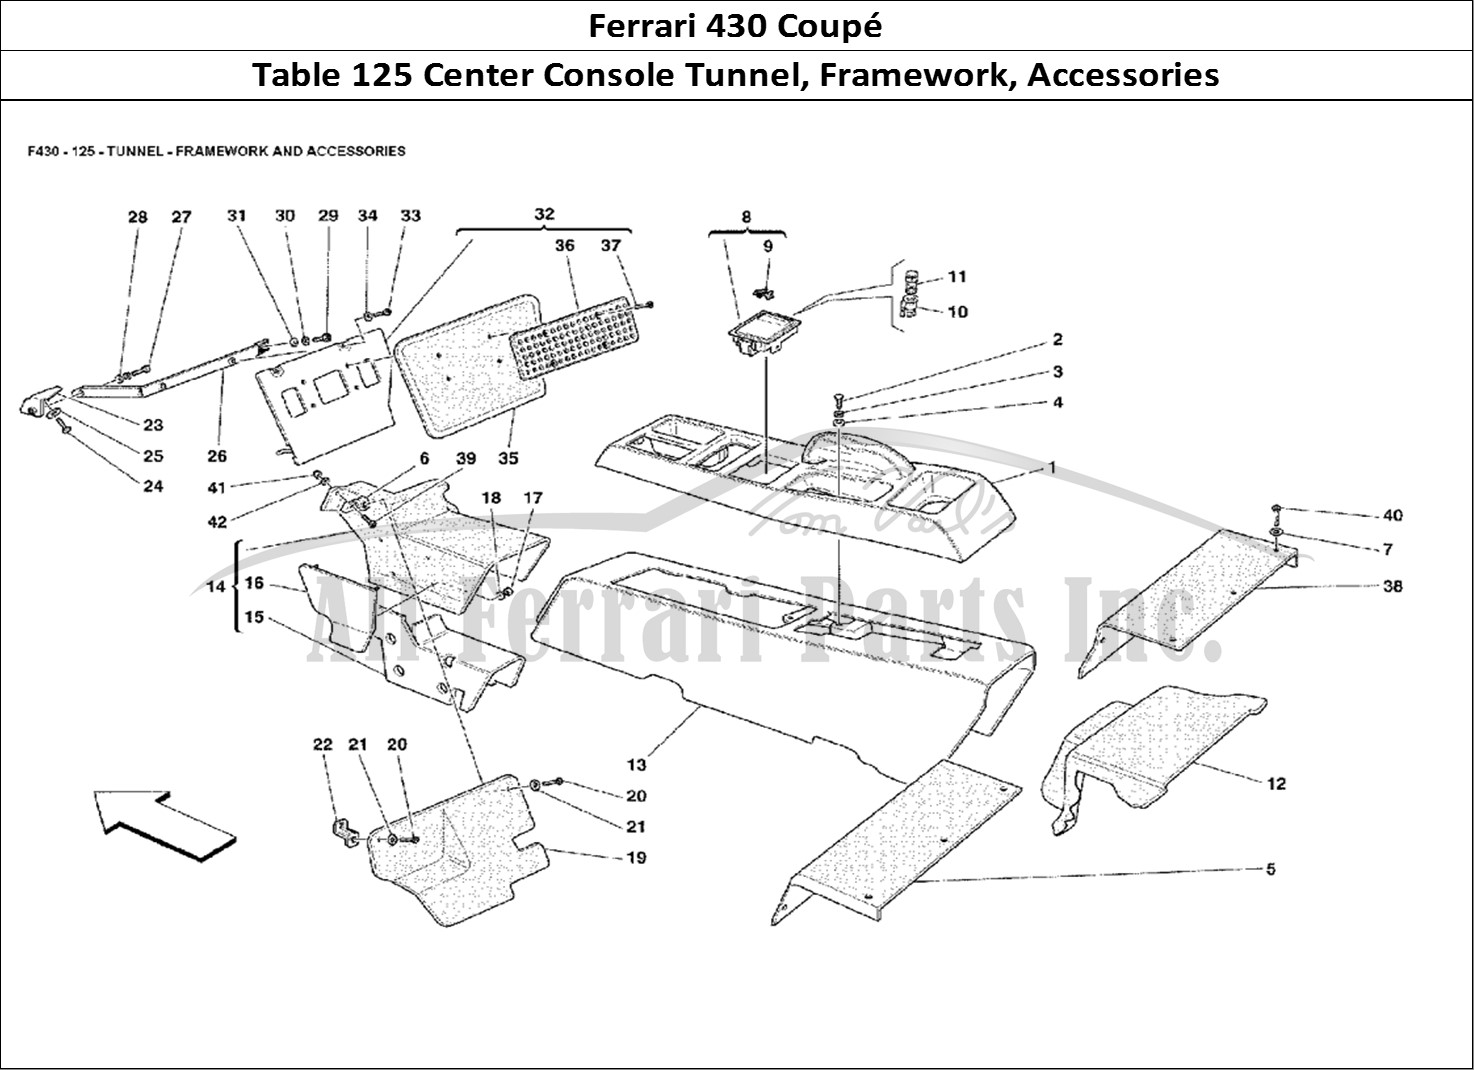 Ferrari Parts Ferrari 430 Coup Page 125 Tunnel - Framework and Ac